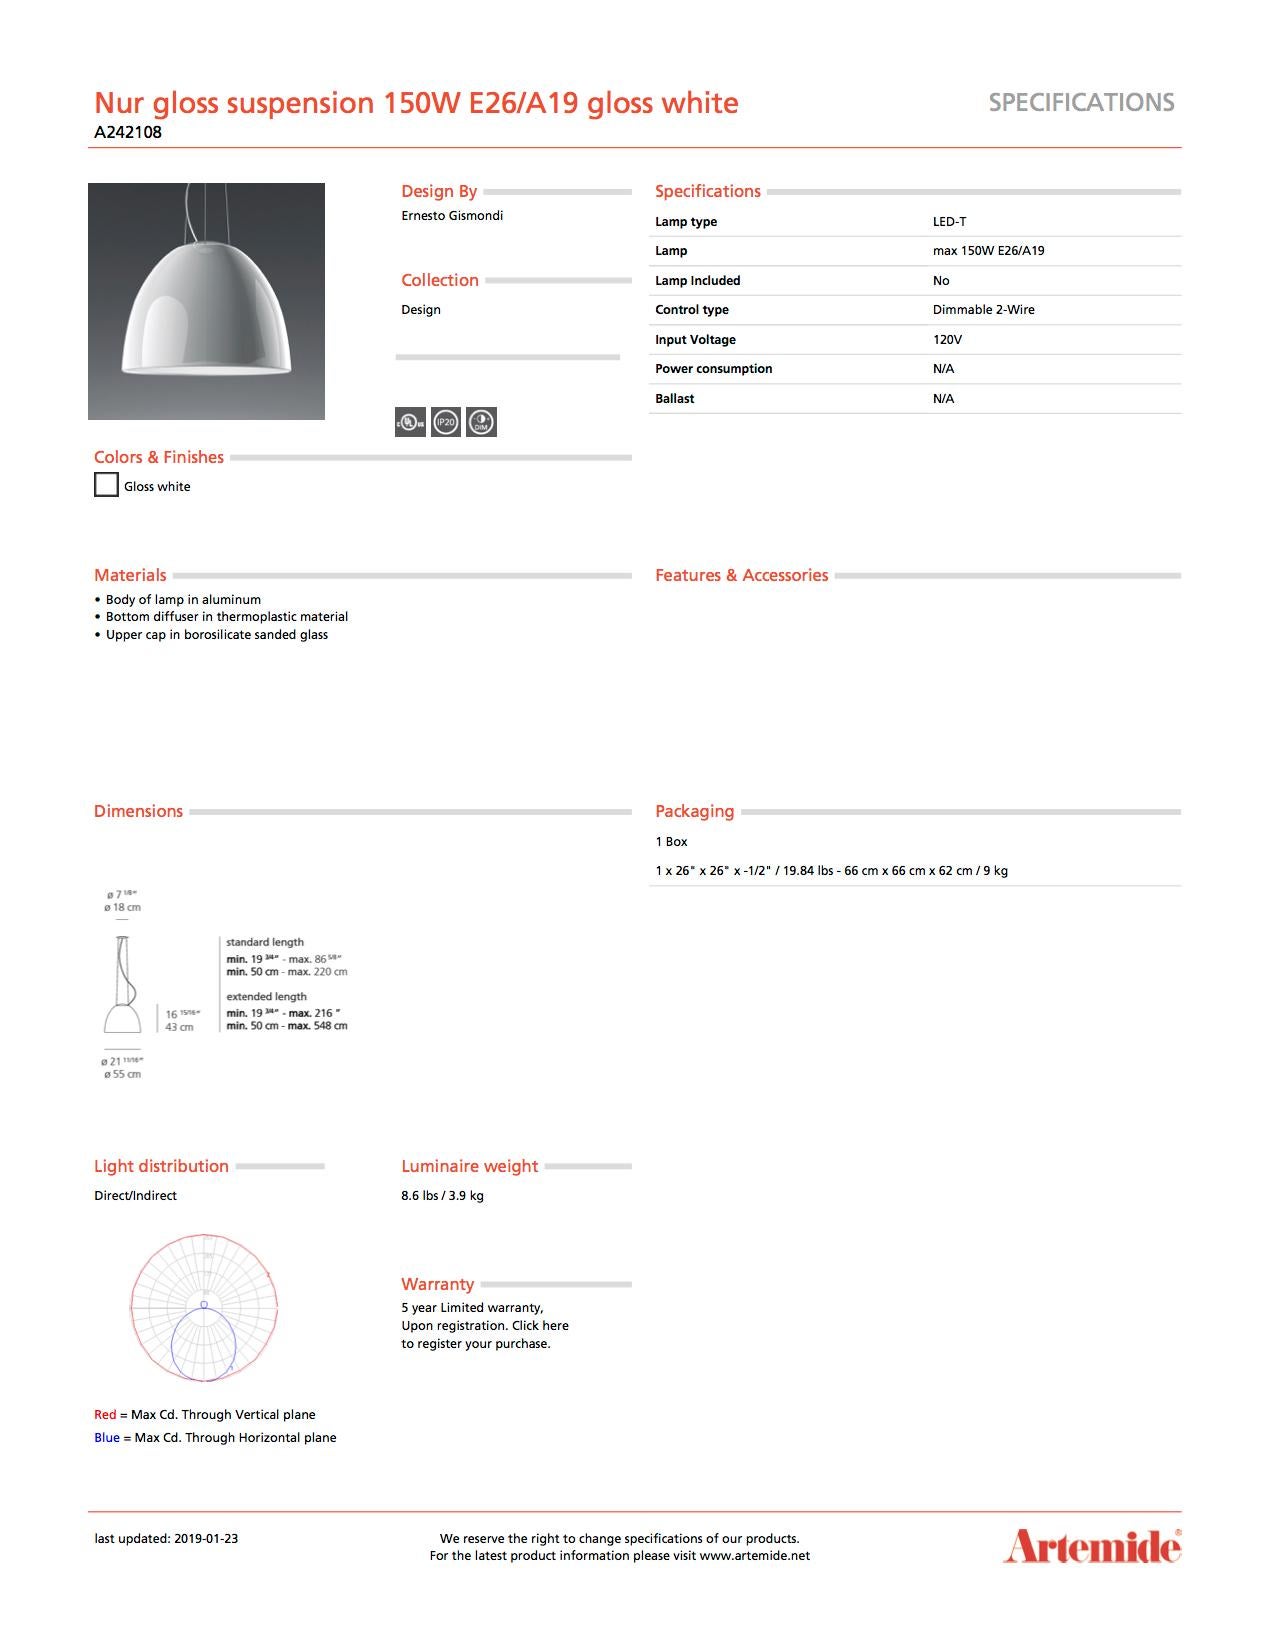 Modern Artemide Nur 150W E26/A19 Suspension Light in Glossy White For Sale